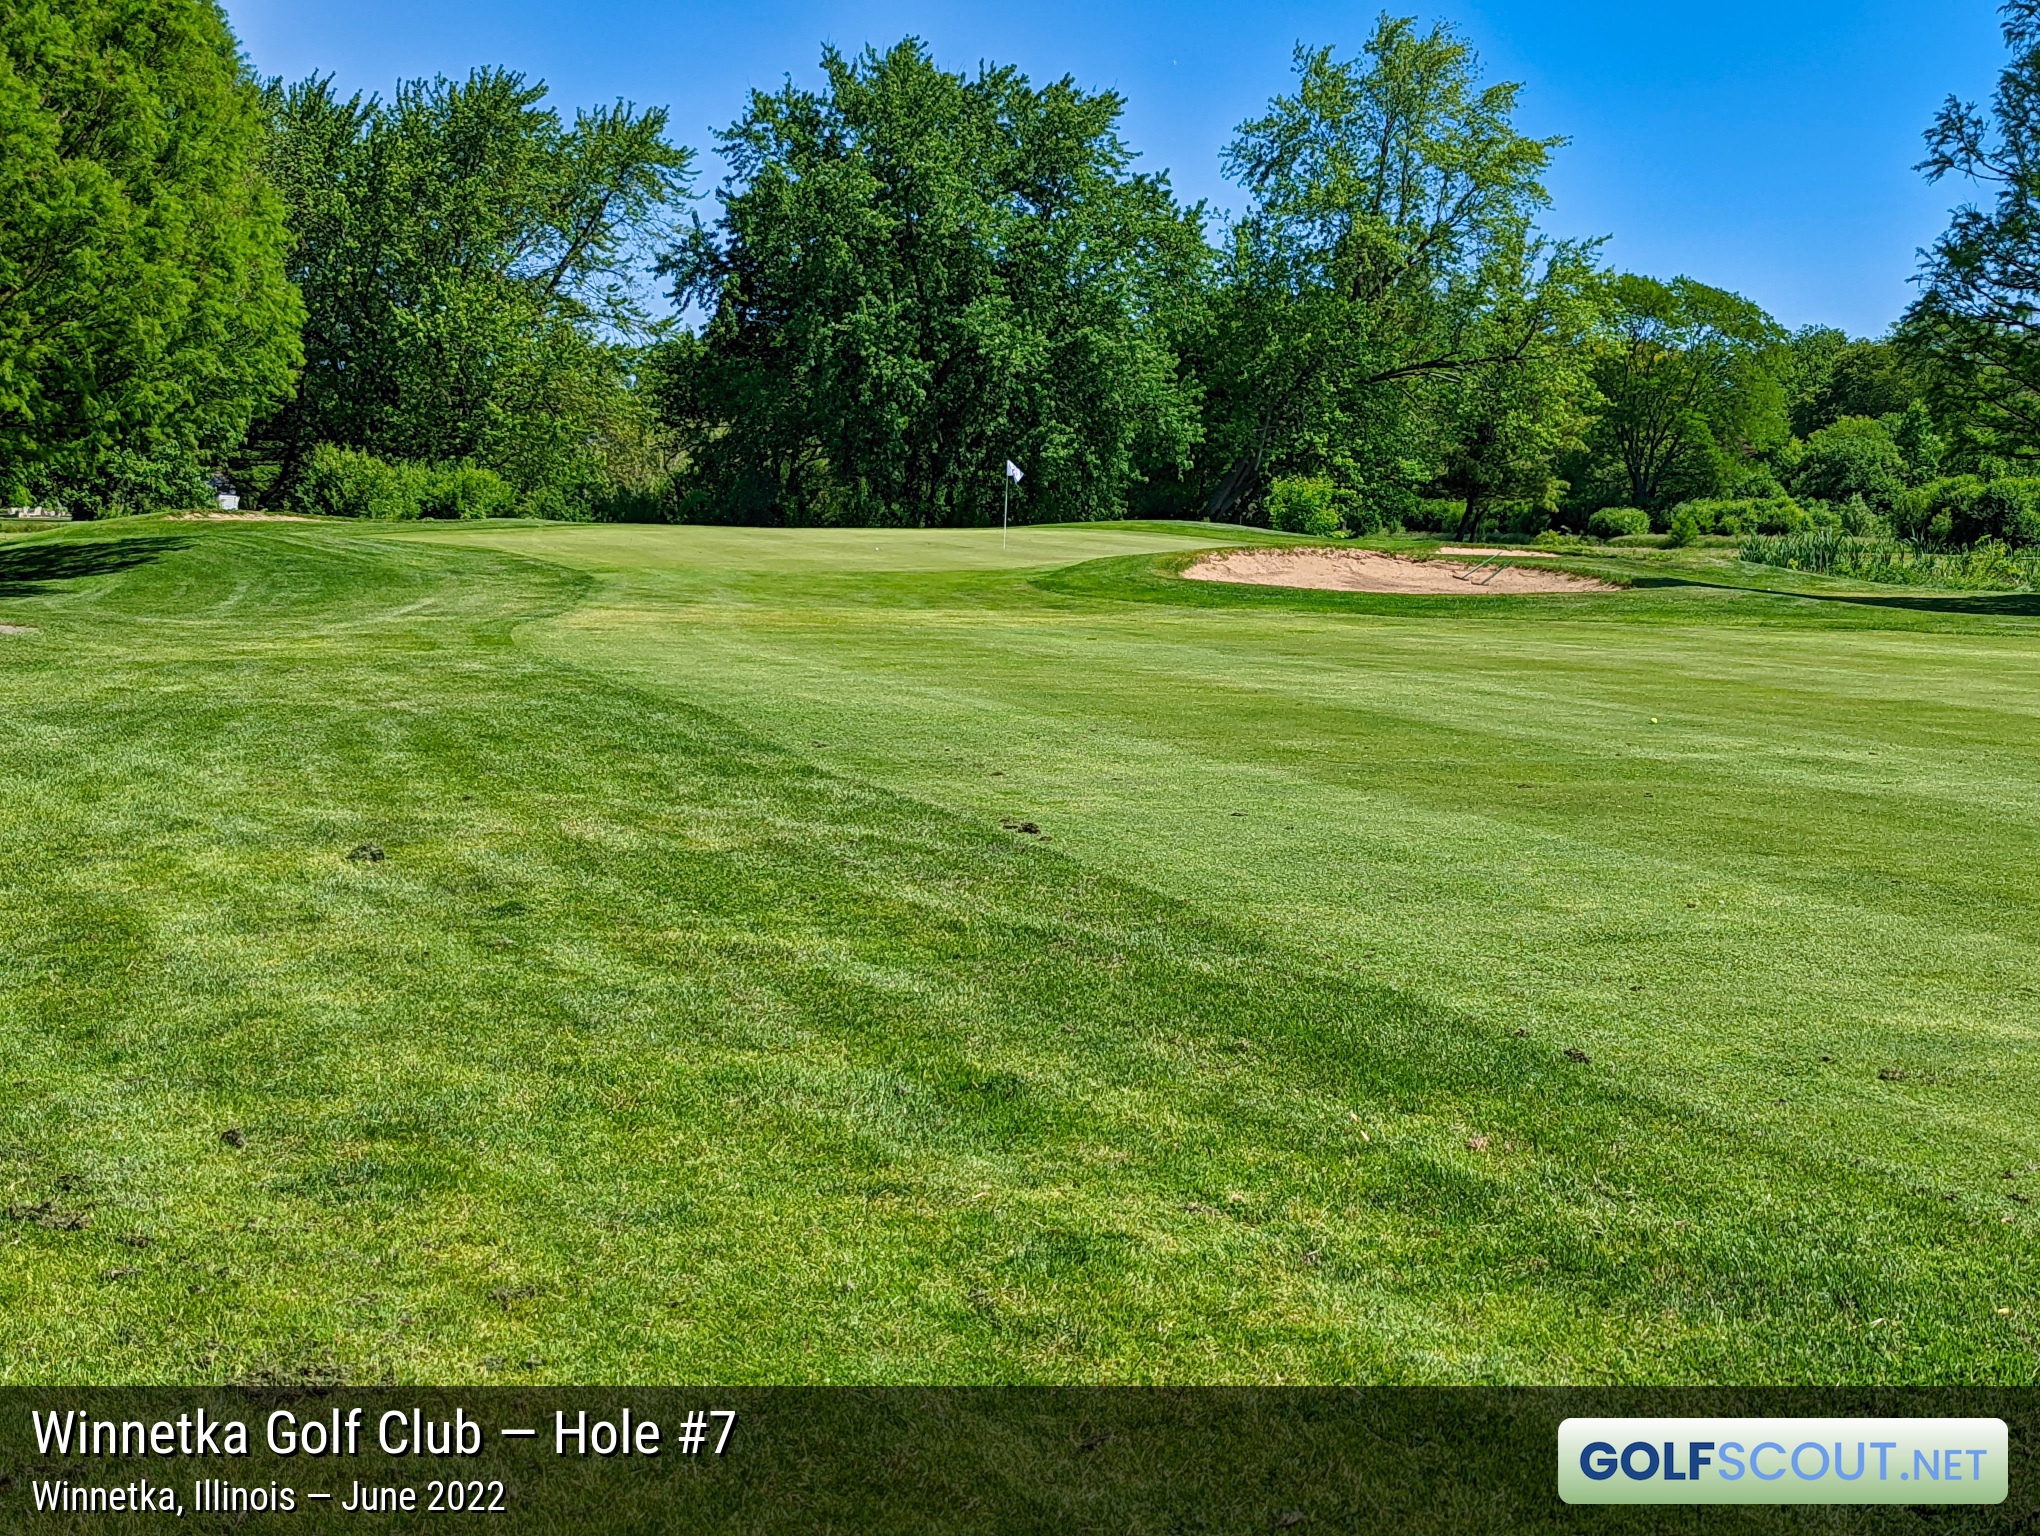 Photo of hole #7 at Winnetka Golf Club in Winnetka, Illinois. 